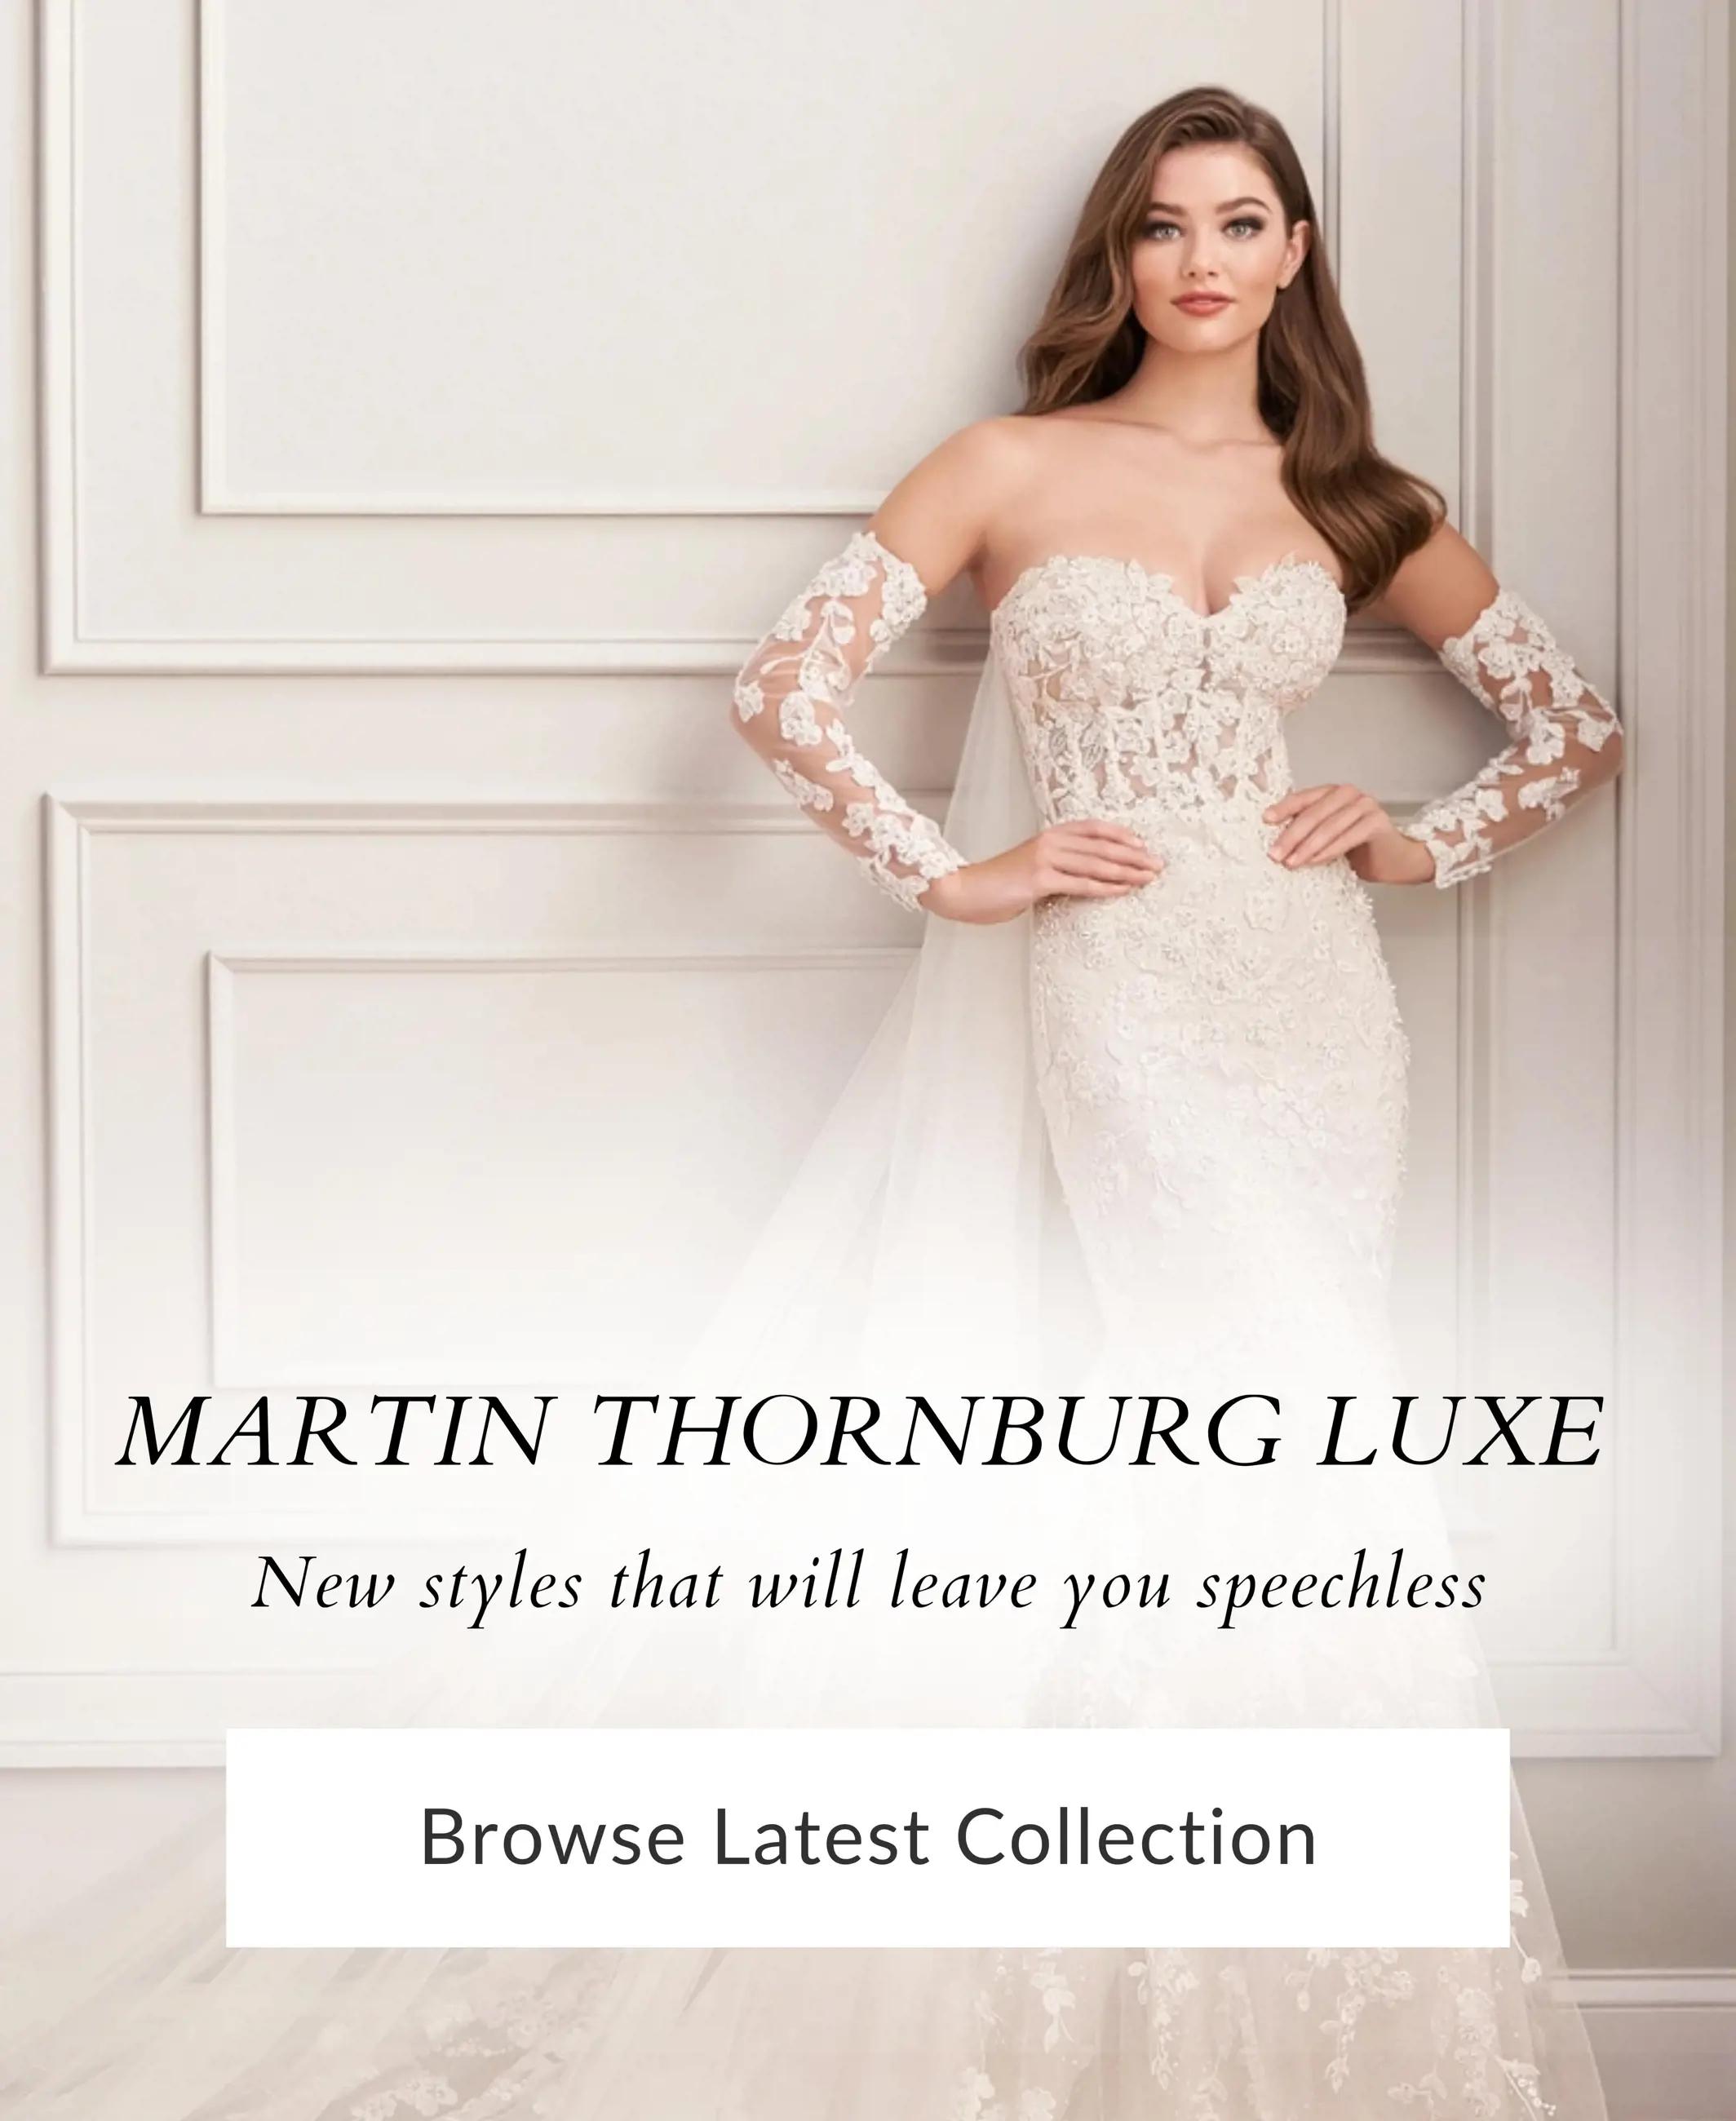 Martin Thornburg Luxe Mobile